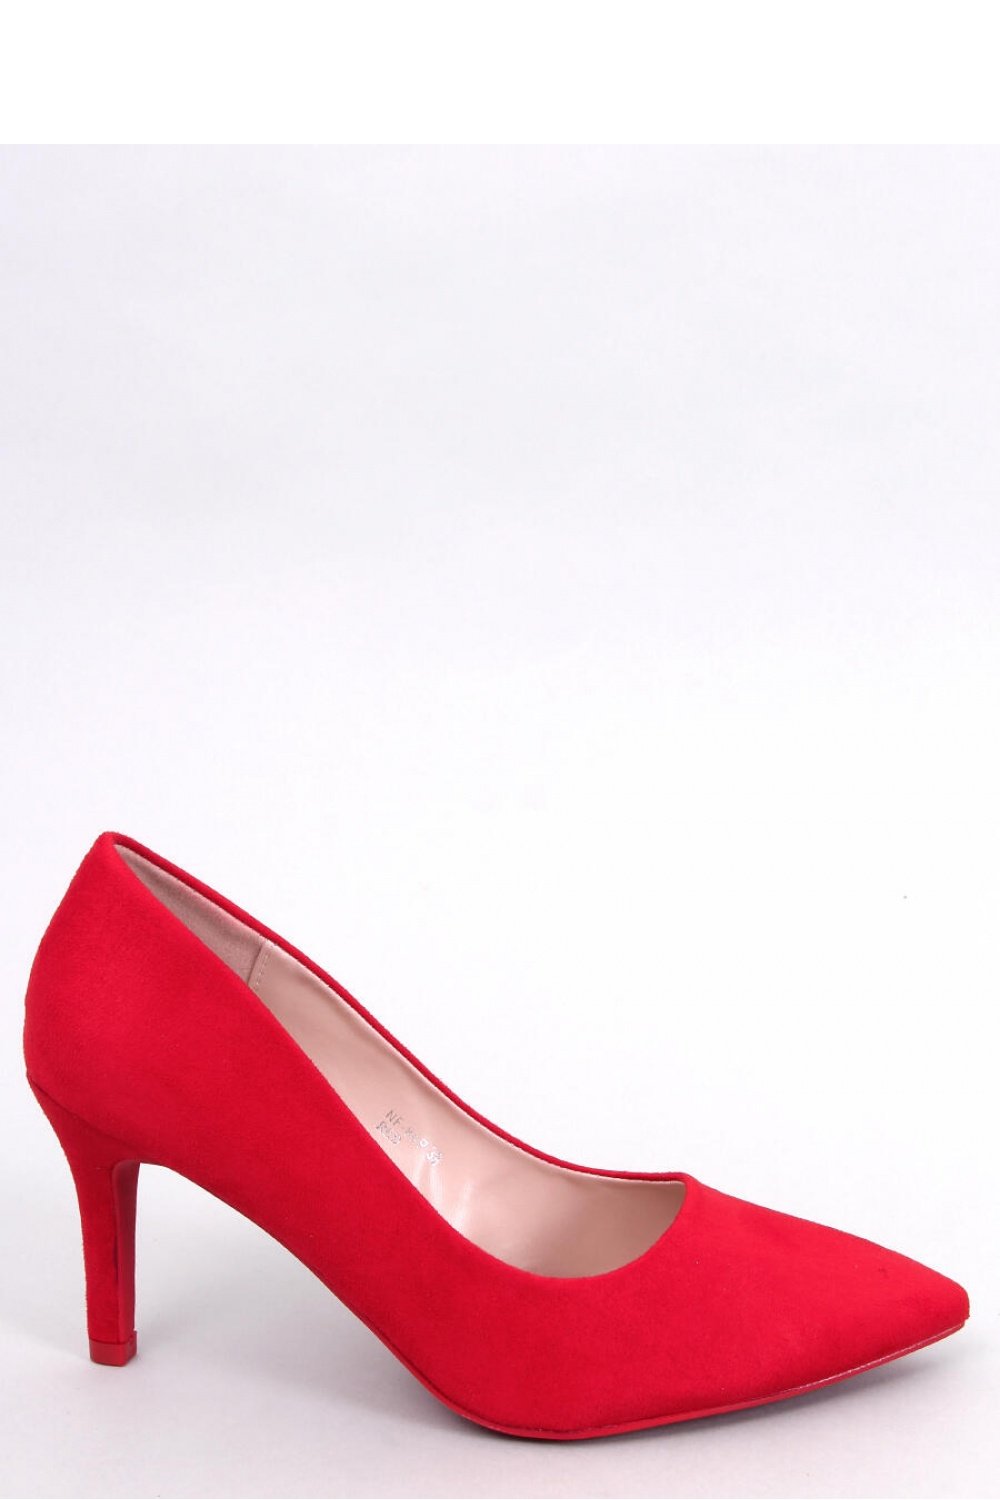 High heels model 178788 Inello Posh Styles Apparel